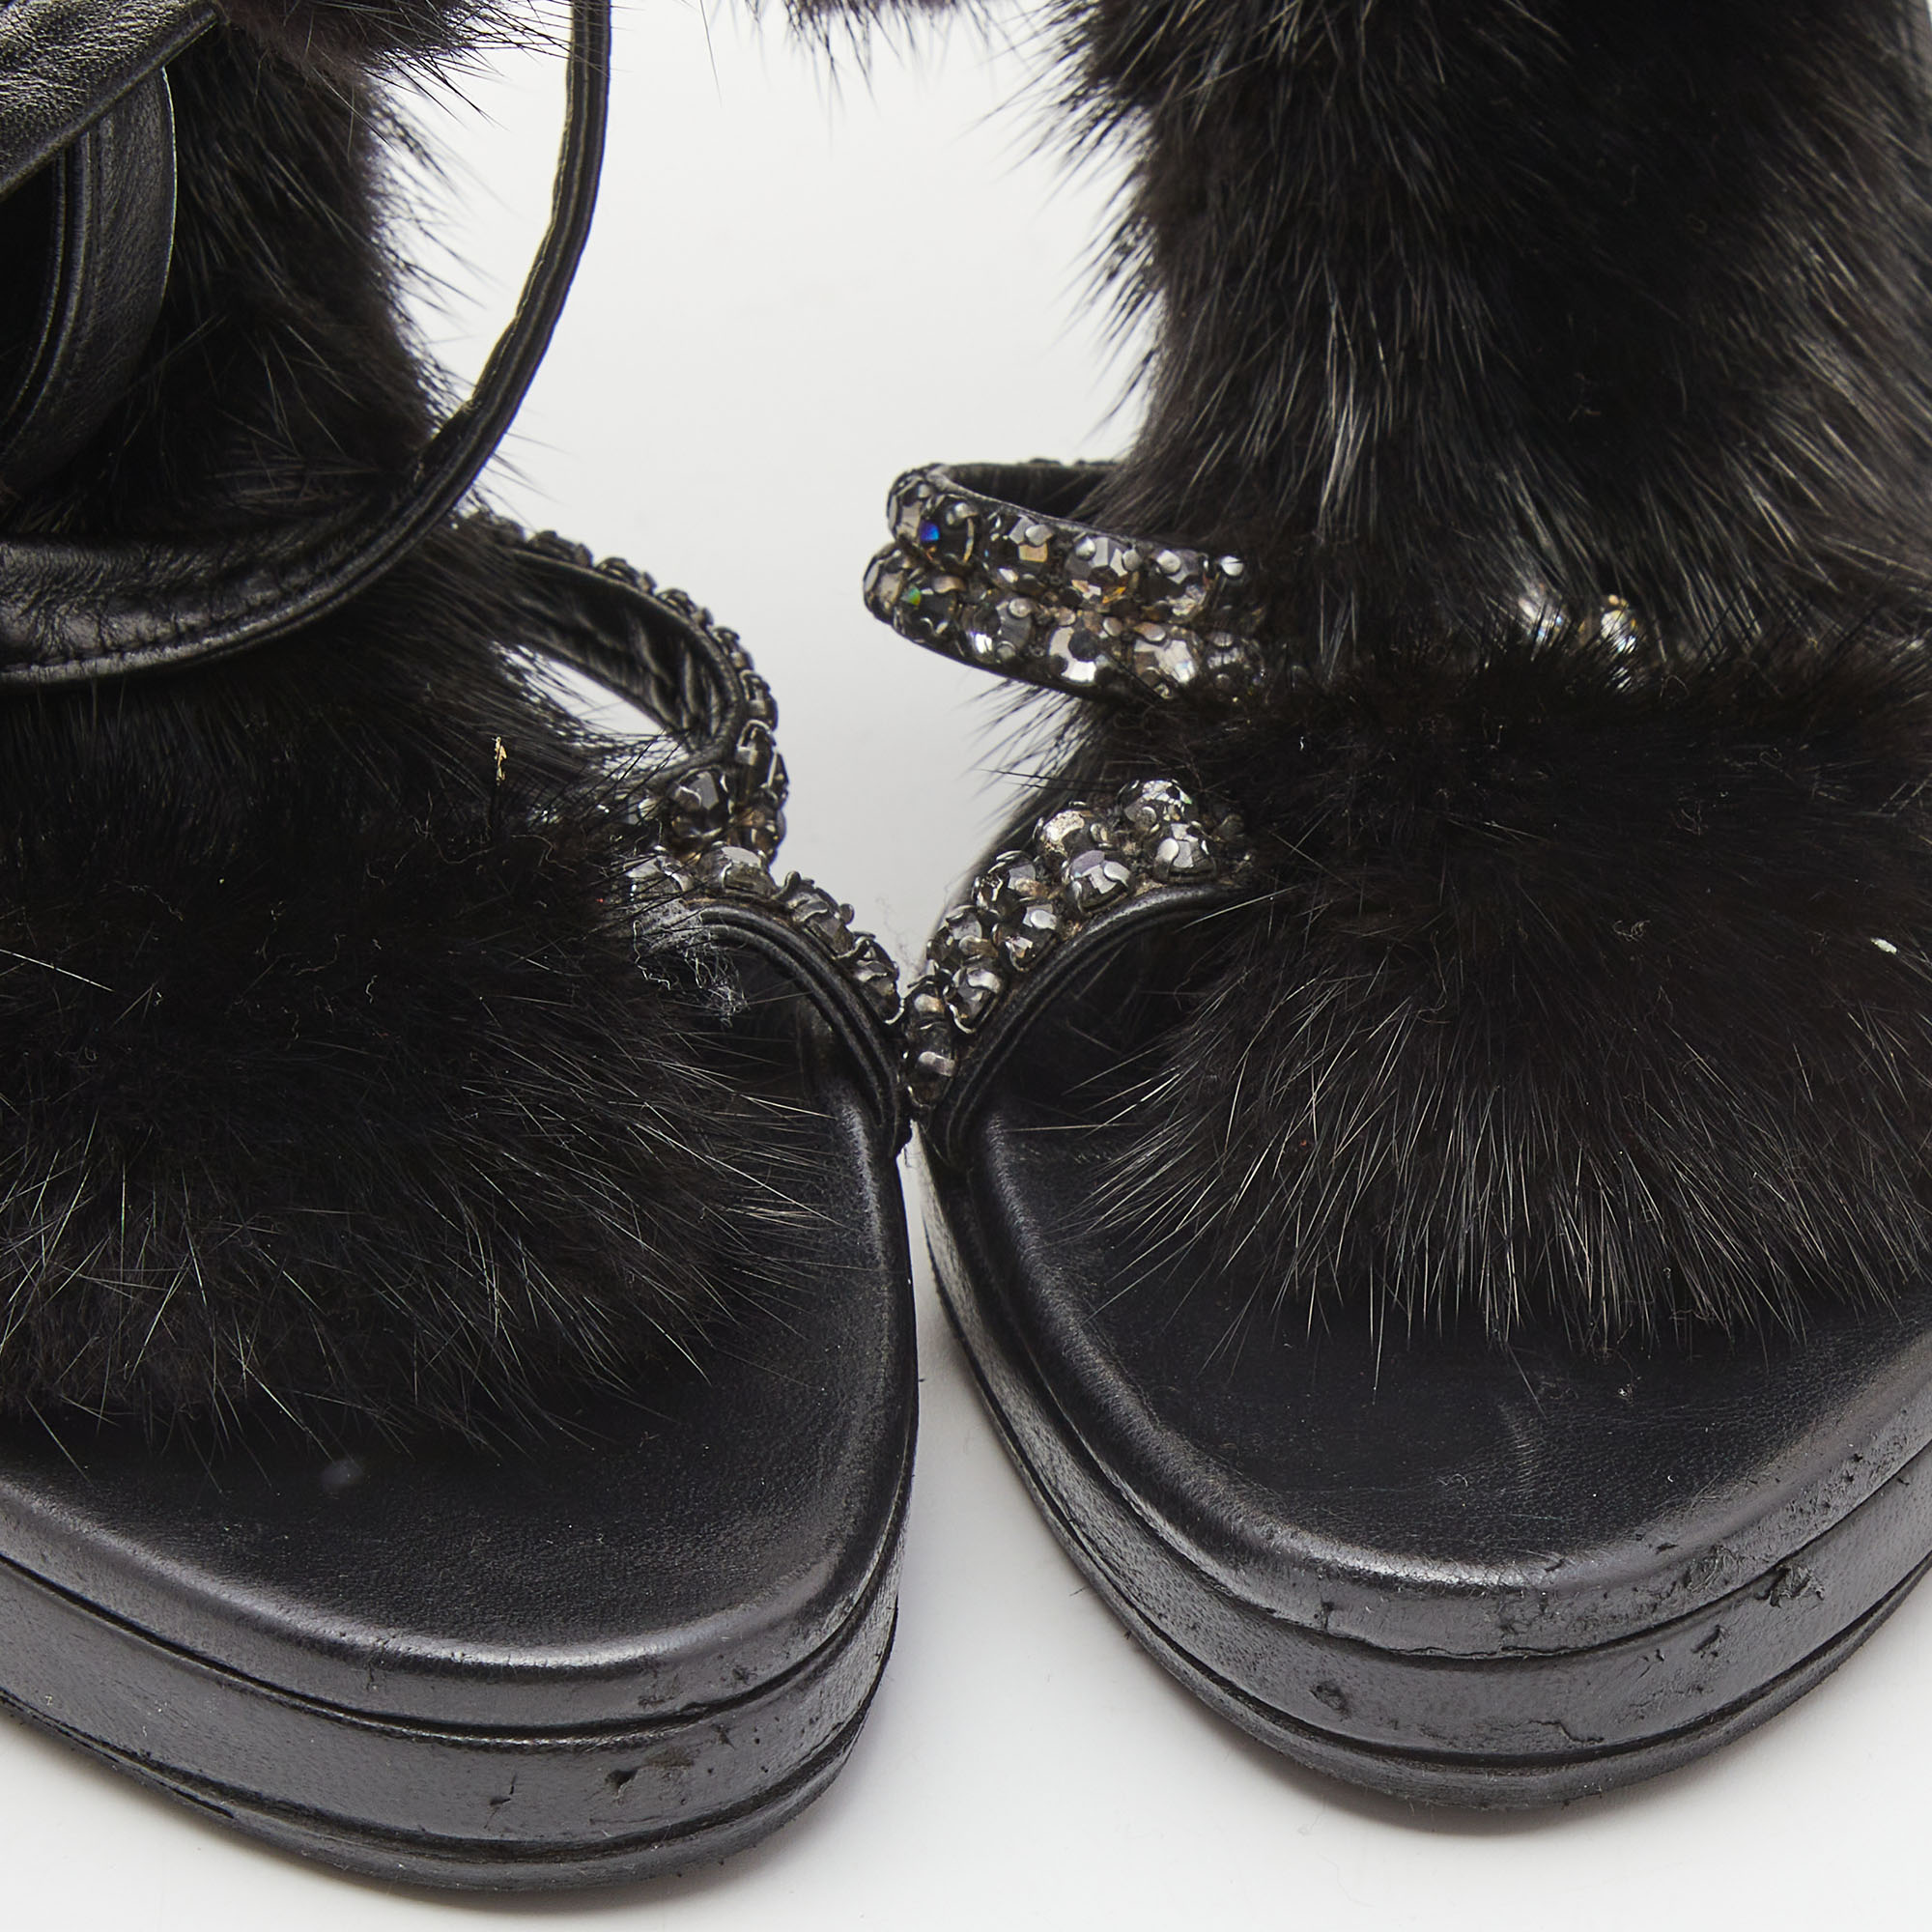 Gucci Black Python Leather And Mink Fur Crystal Embellished Ankle Wrap Sandals Size 36